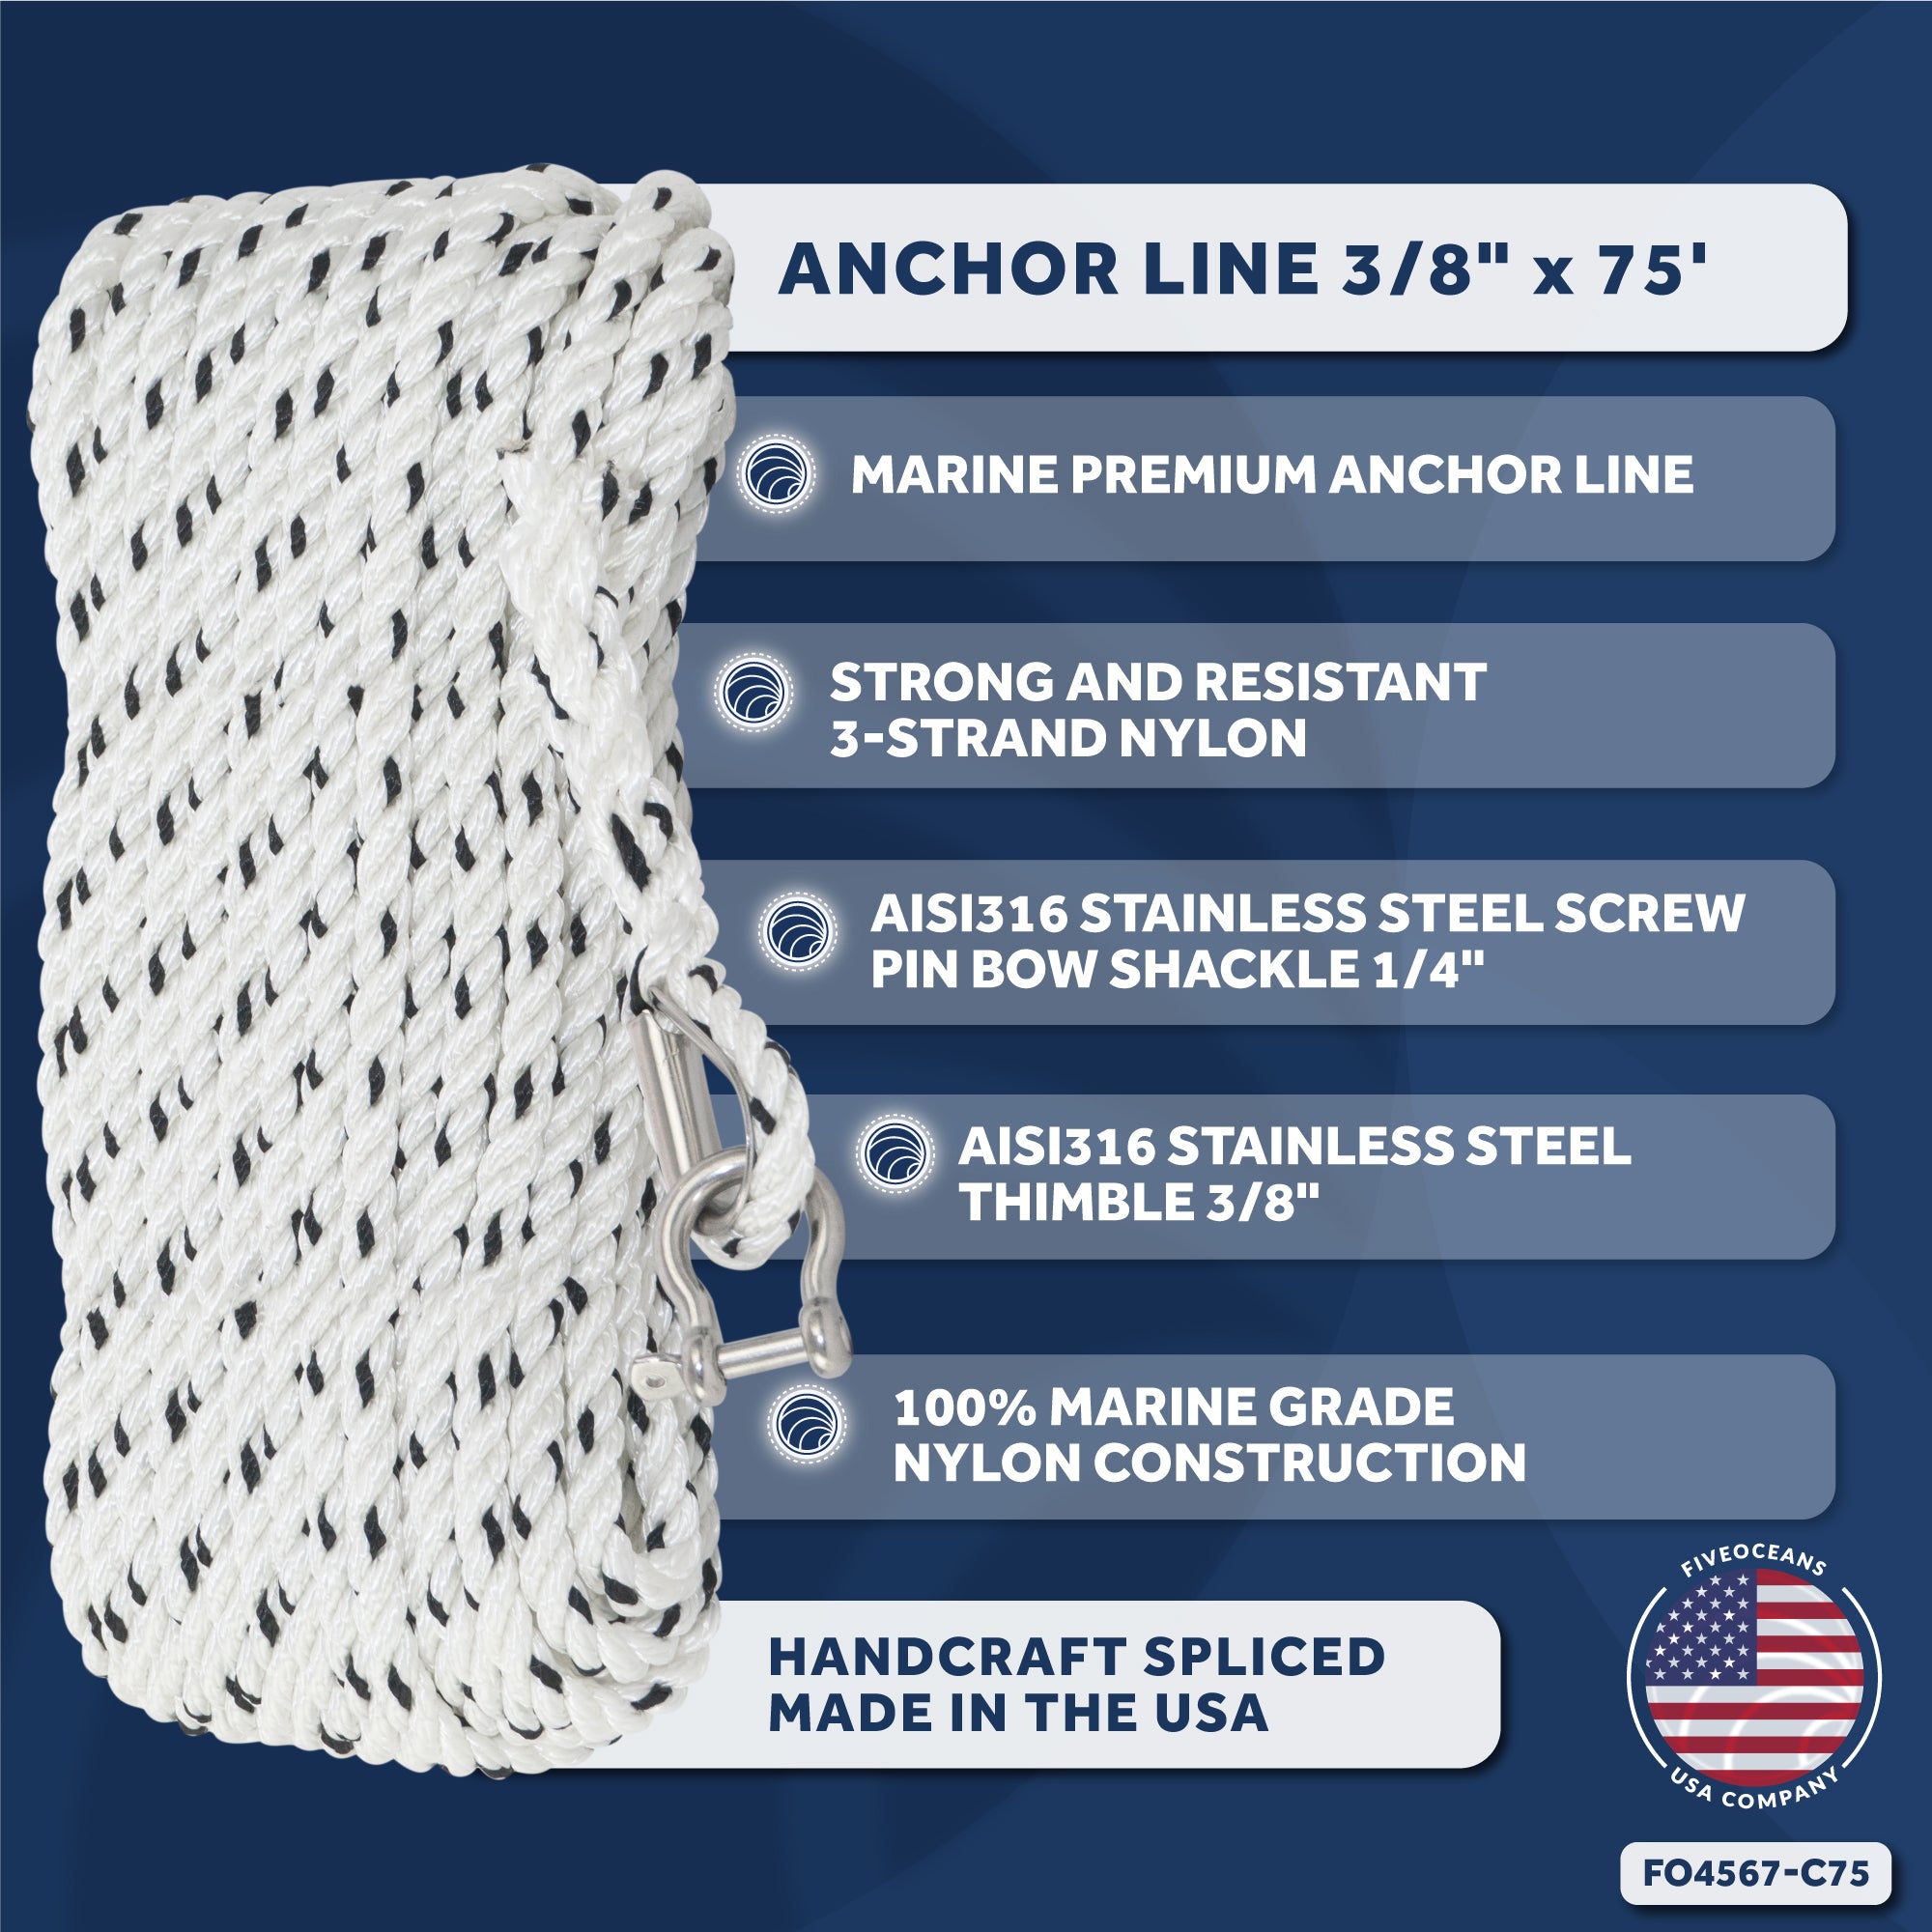 Anchor Line 3/8" x 75', 3-Strand Nylon, Spliced - FO4567-C75